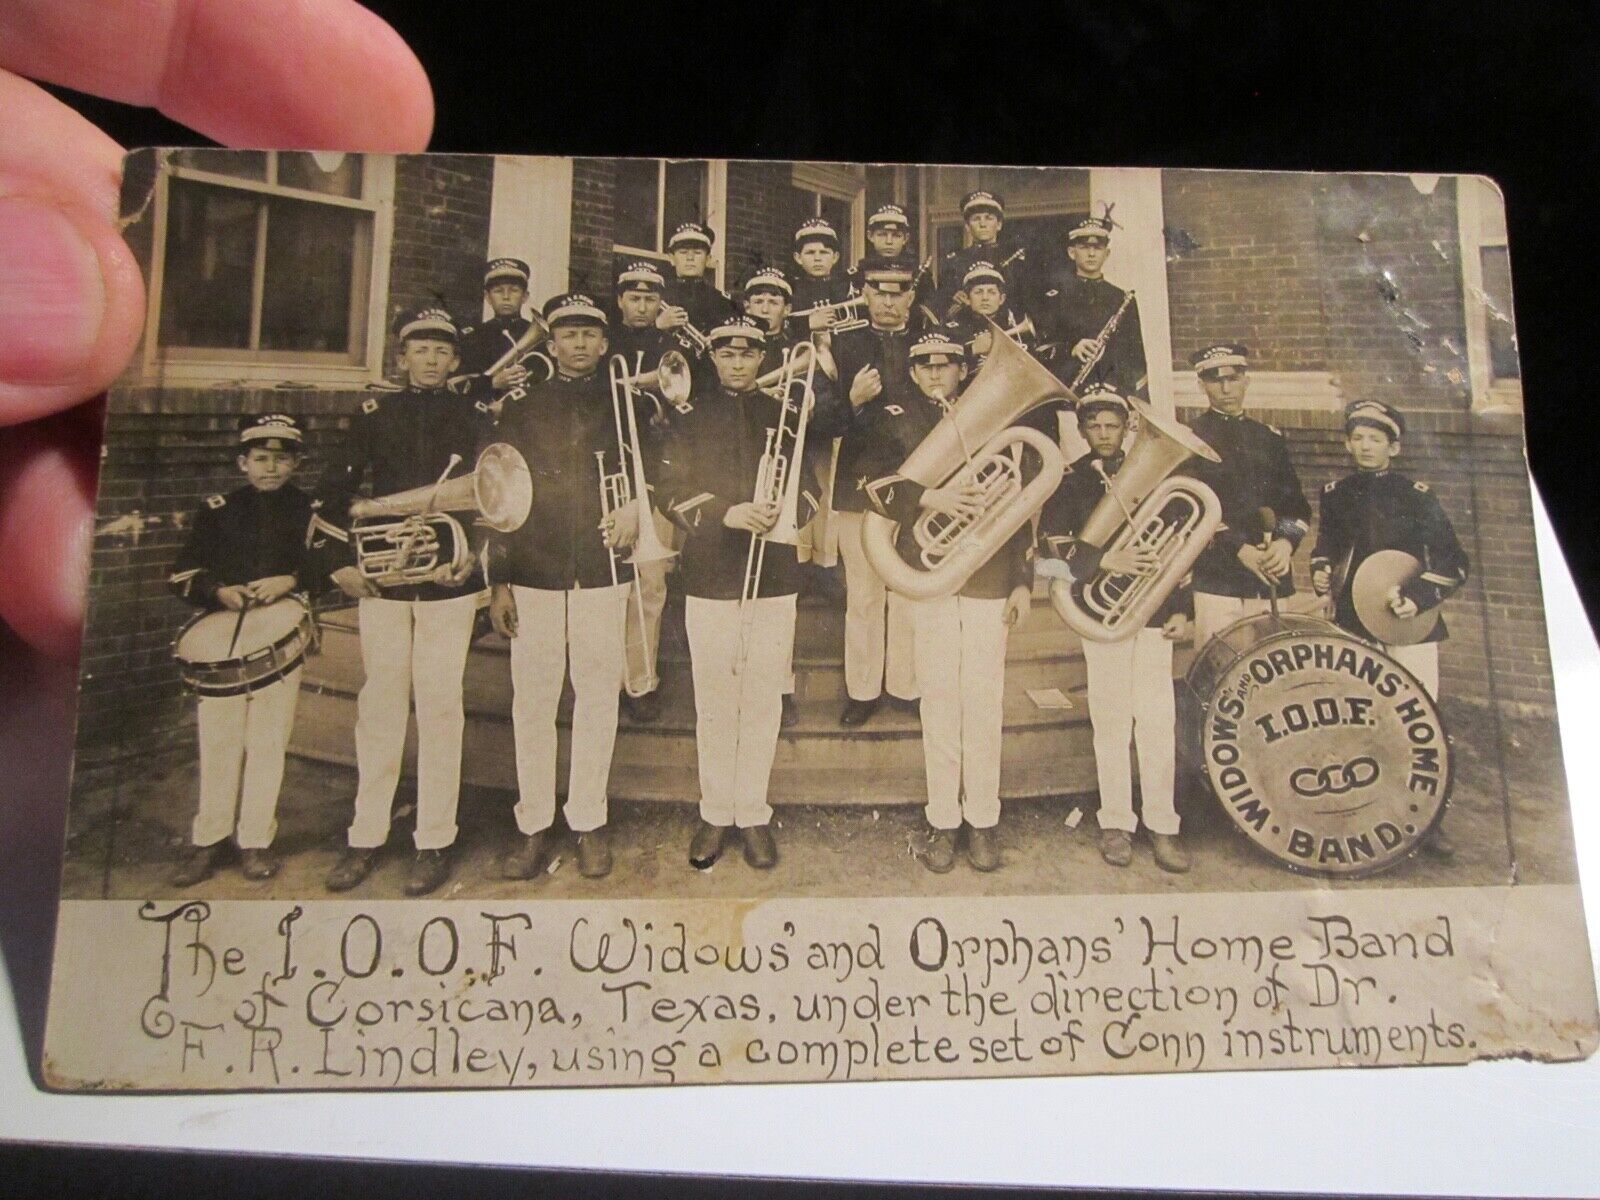 THE I. O. O. F. WIDOWS AND ORPHANS HOME BAND PHOTOGRAPH ON POSTCARD BBA-50